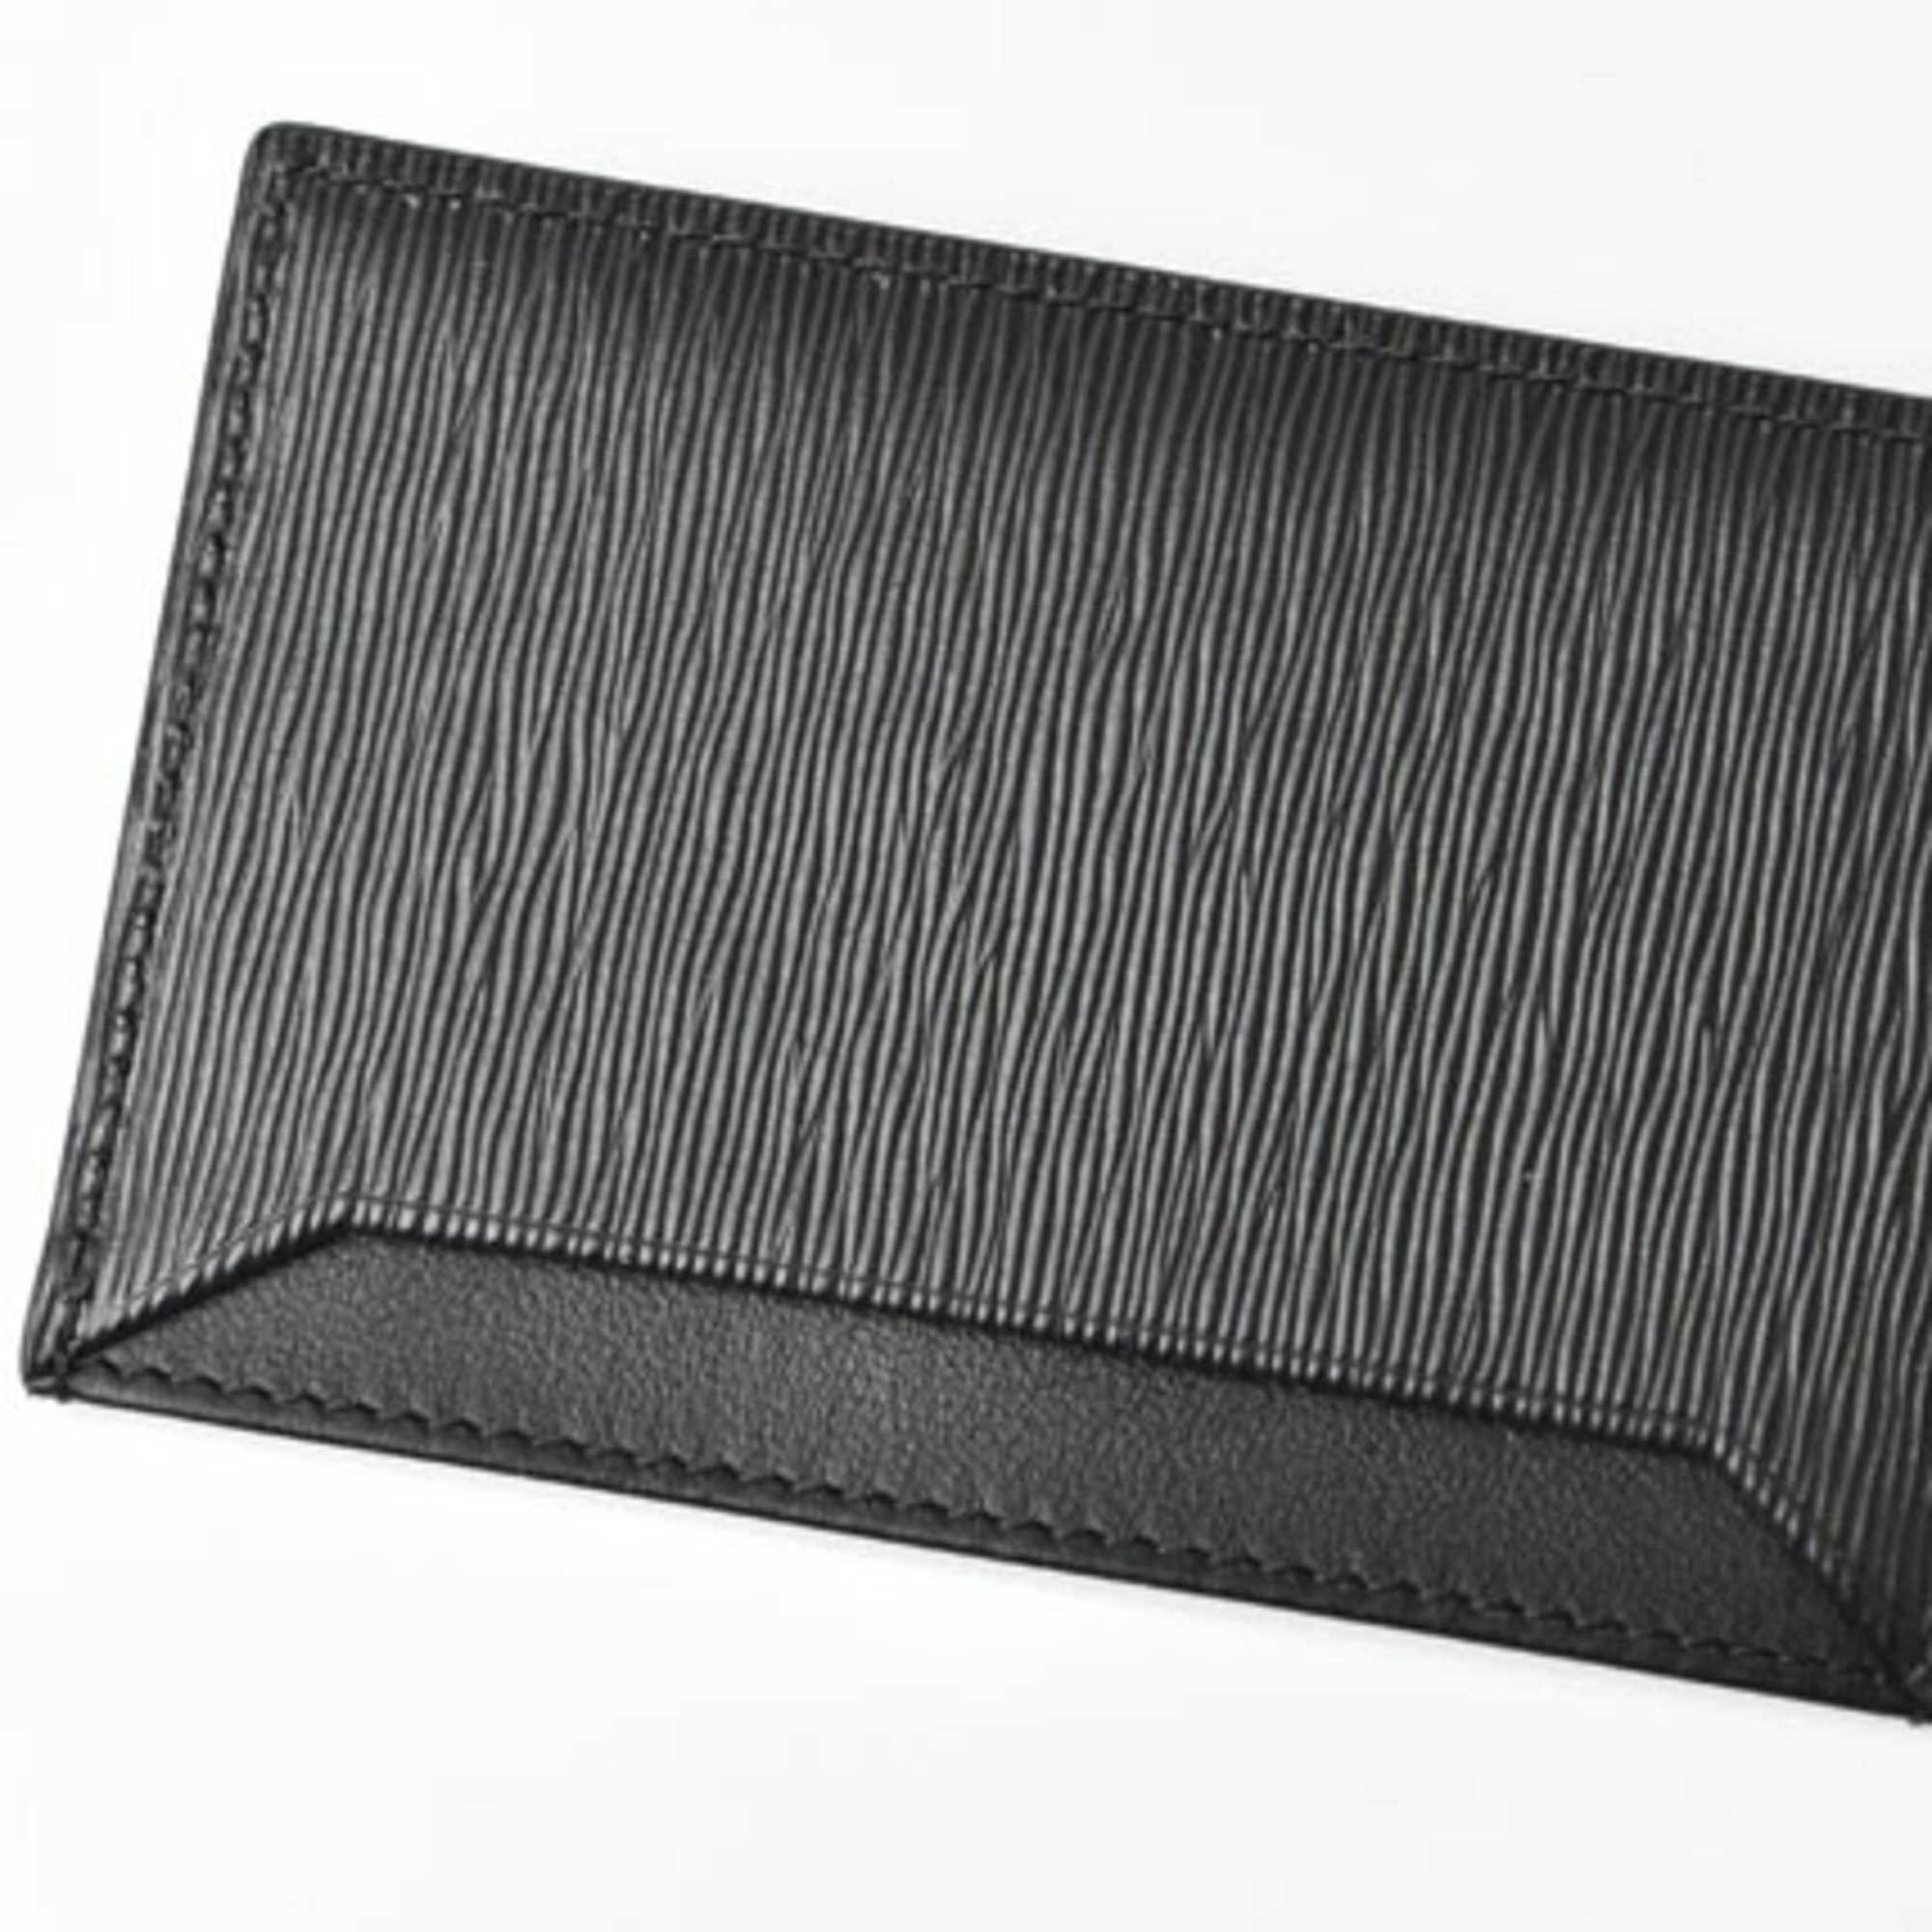 Prada Card Case/Business Holder PRADA 1MC208 VITELLO MOVE Leather Pass Case Black Outlet